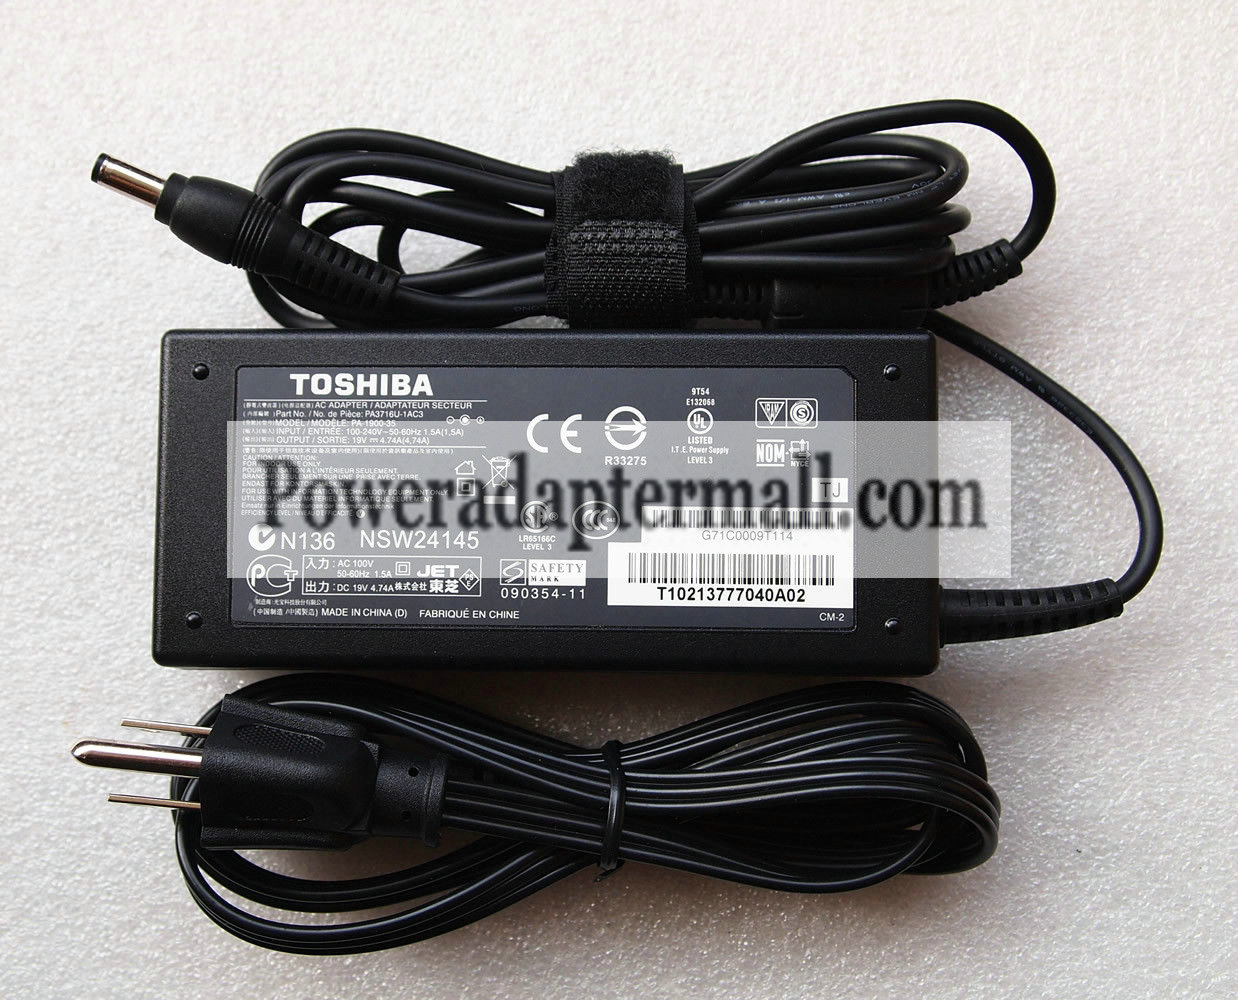 19V 4.74A 90W Toshiba Satellite 1005 PA-1600-01 AC Adapter